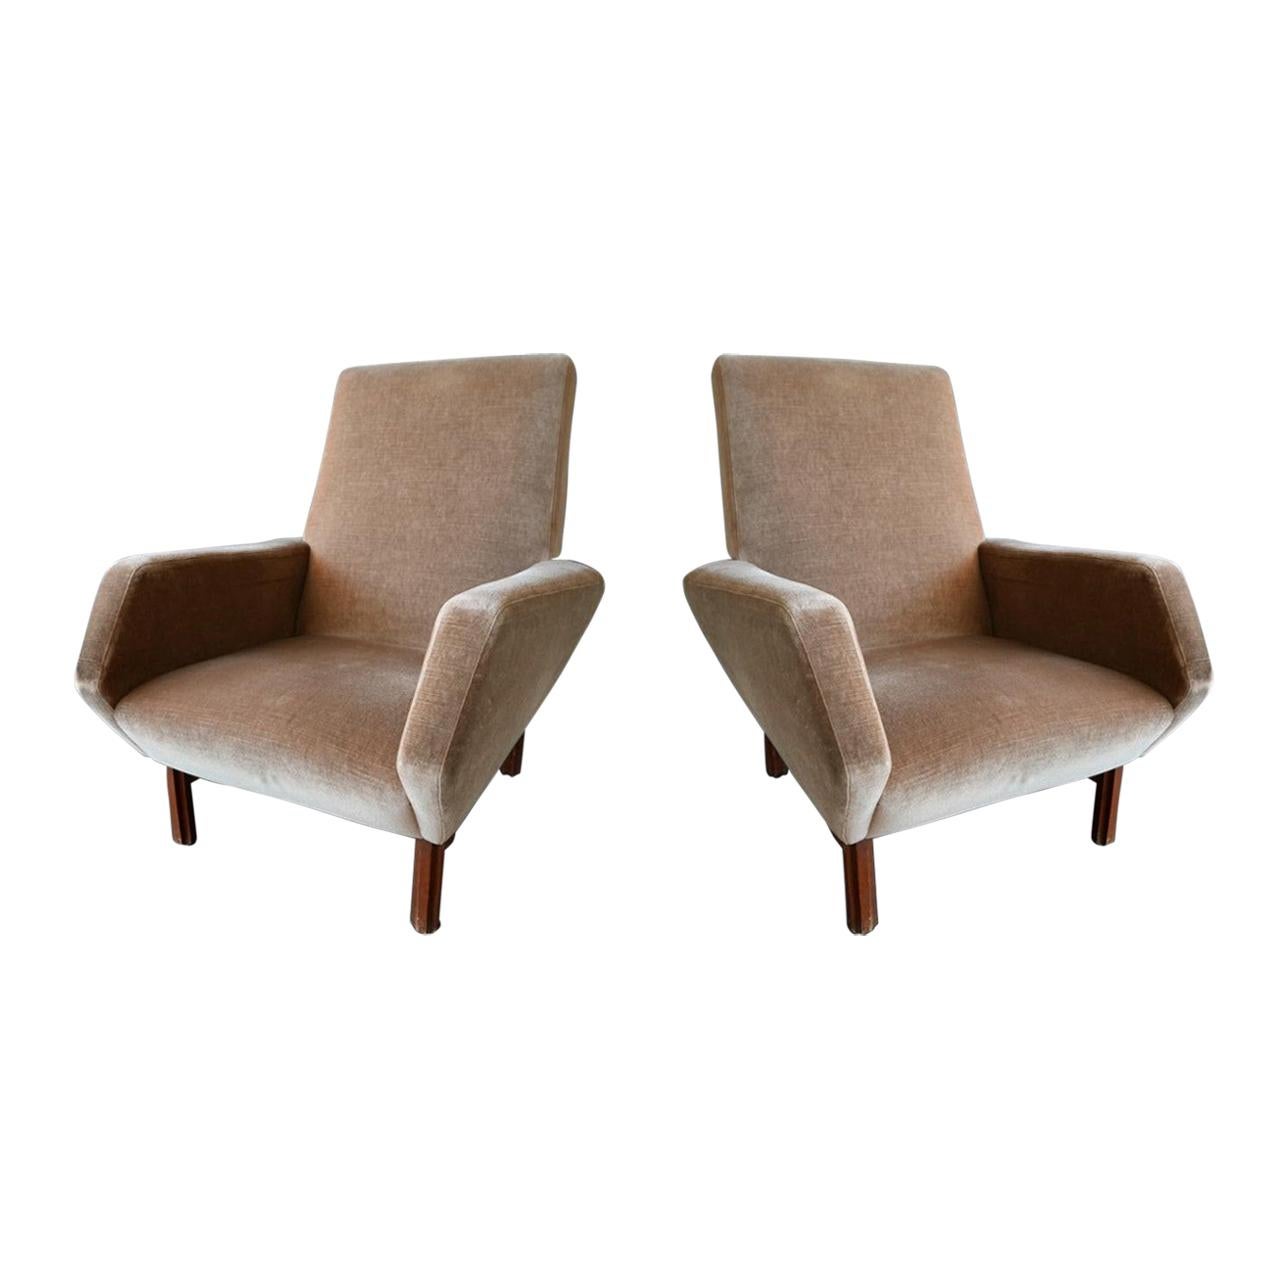 Pair of Italian Modern Prototype Chairs, 1960s, Gianfranco Frattini